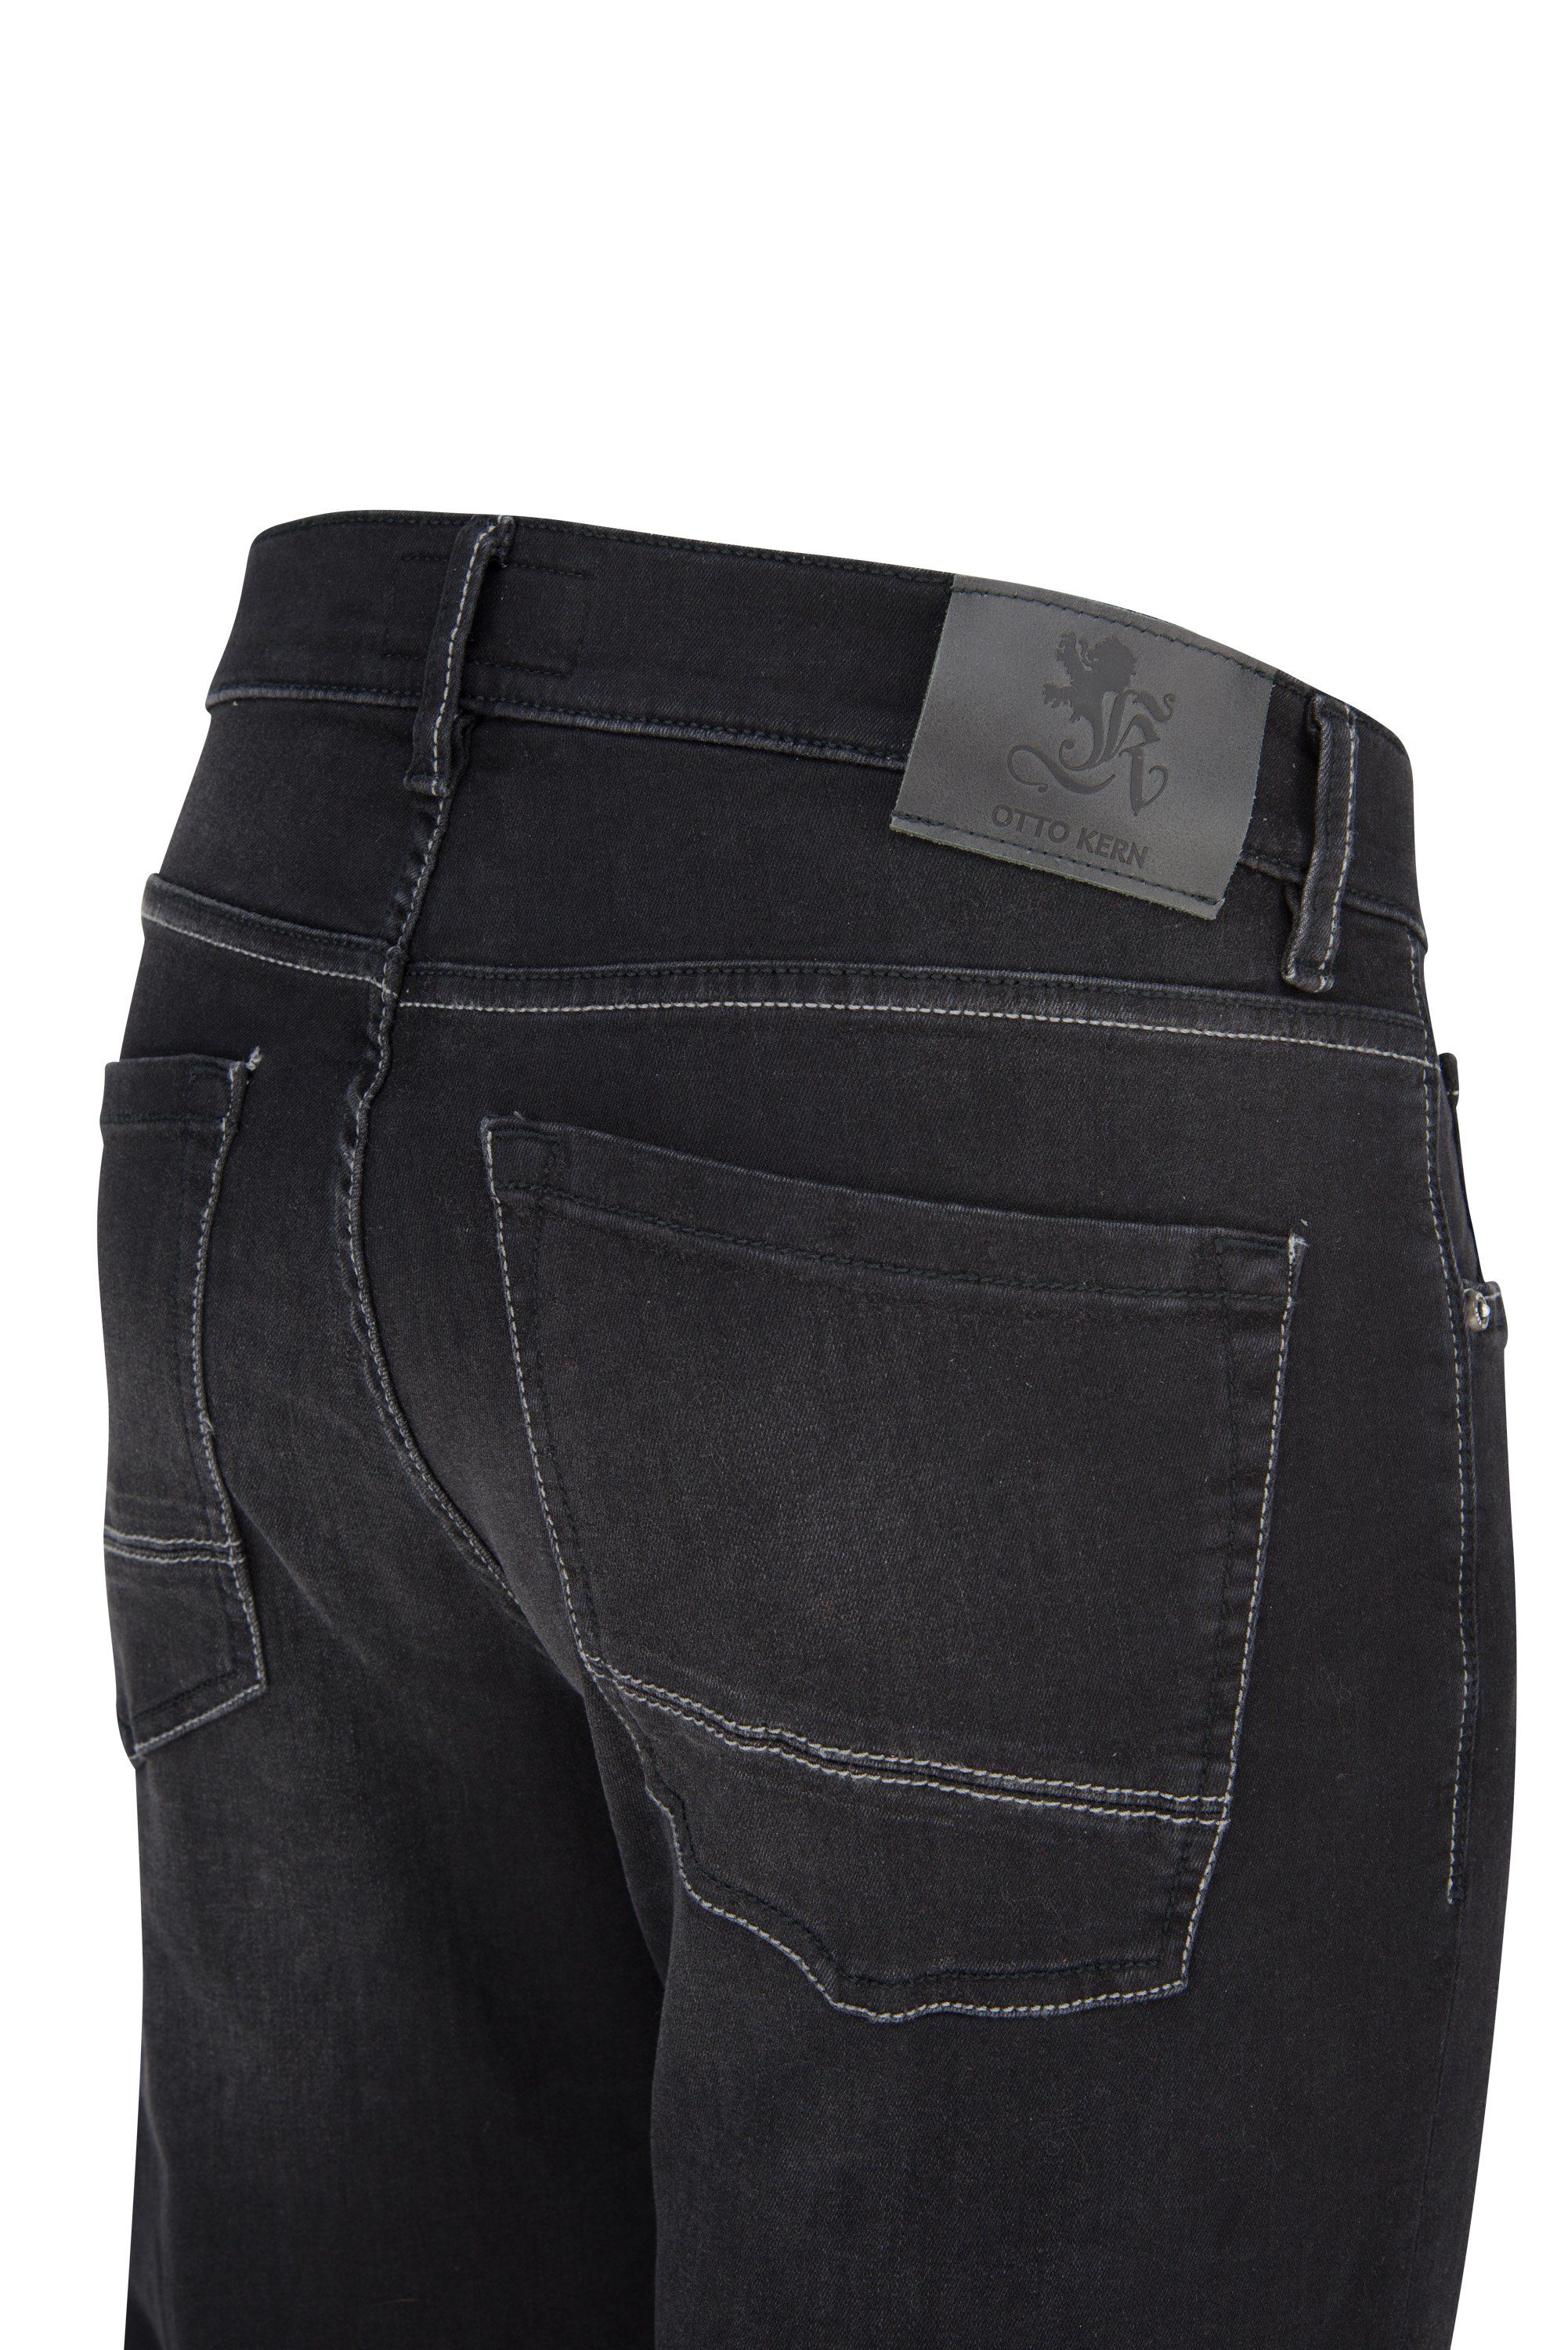 5-Pocket-Jeans used JOHN KERN 6833.9802 black black 67001 OTTO Kern